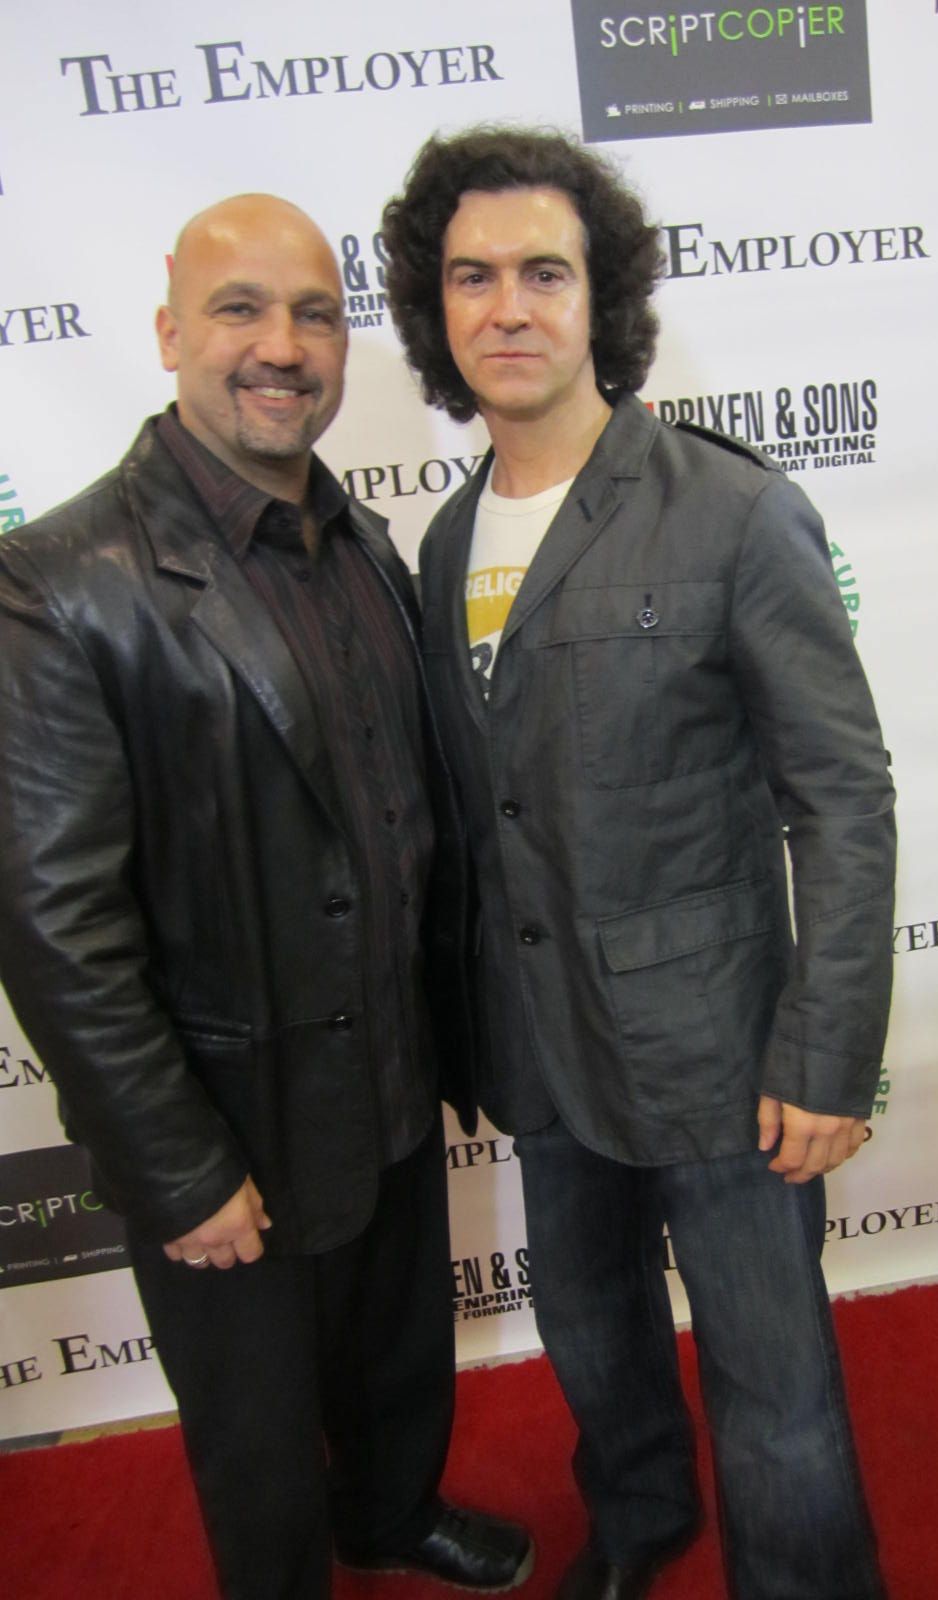 Bryan Hanna and Emilio Lavizzi at 'The Employer' Premiere screening.